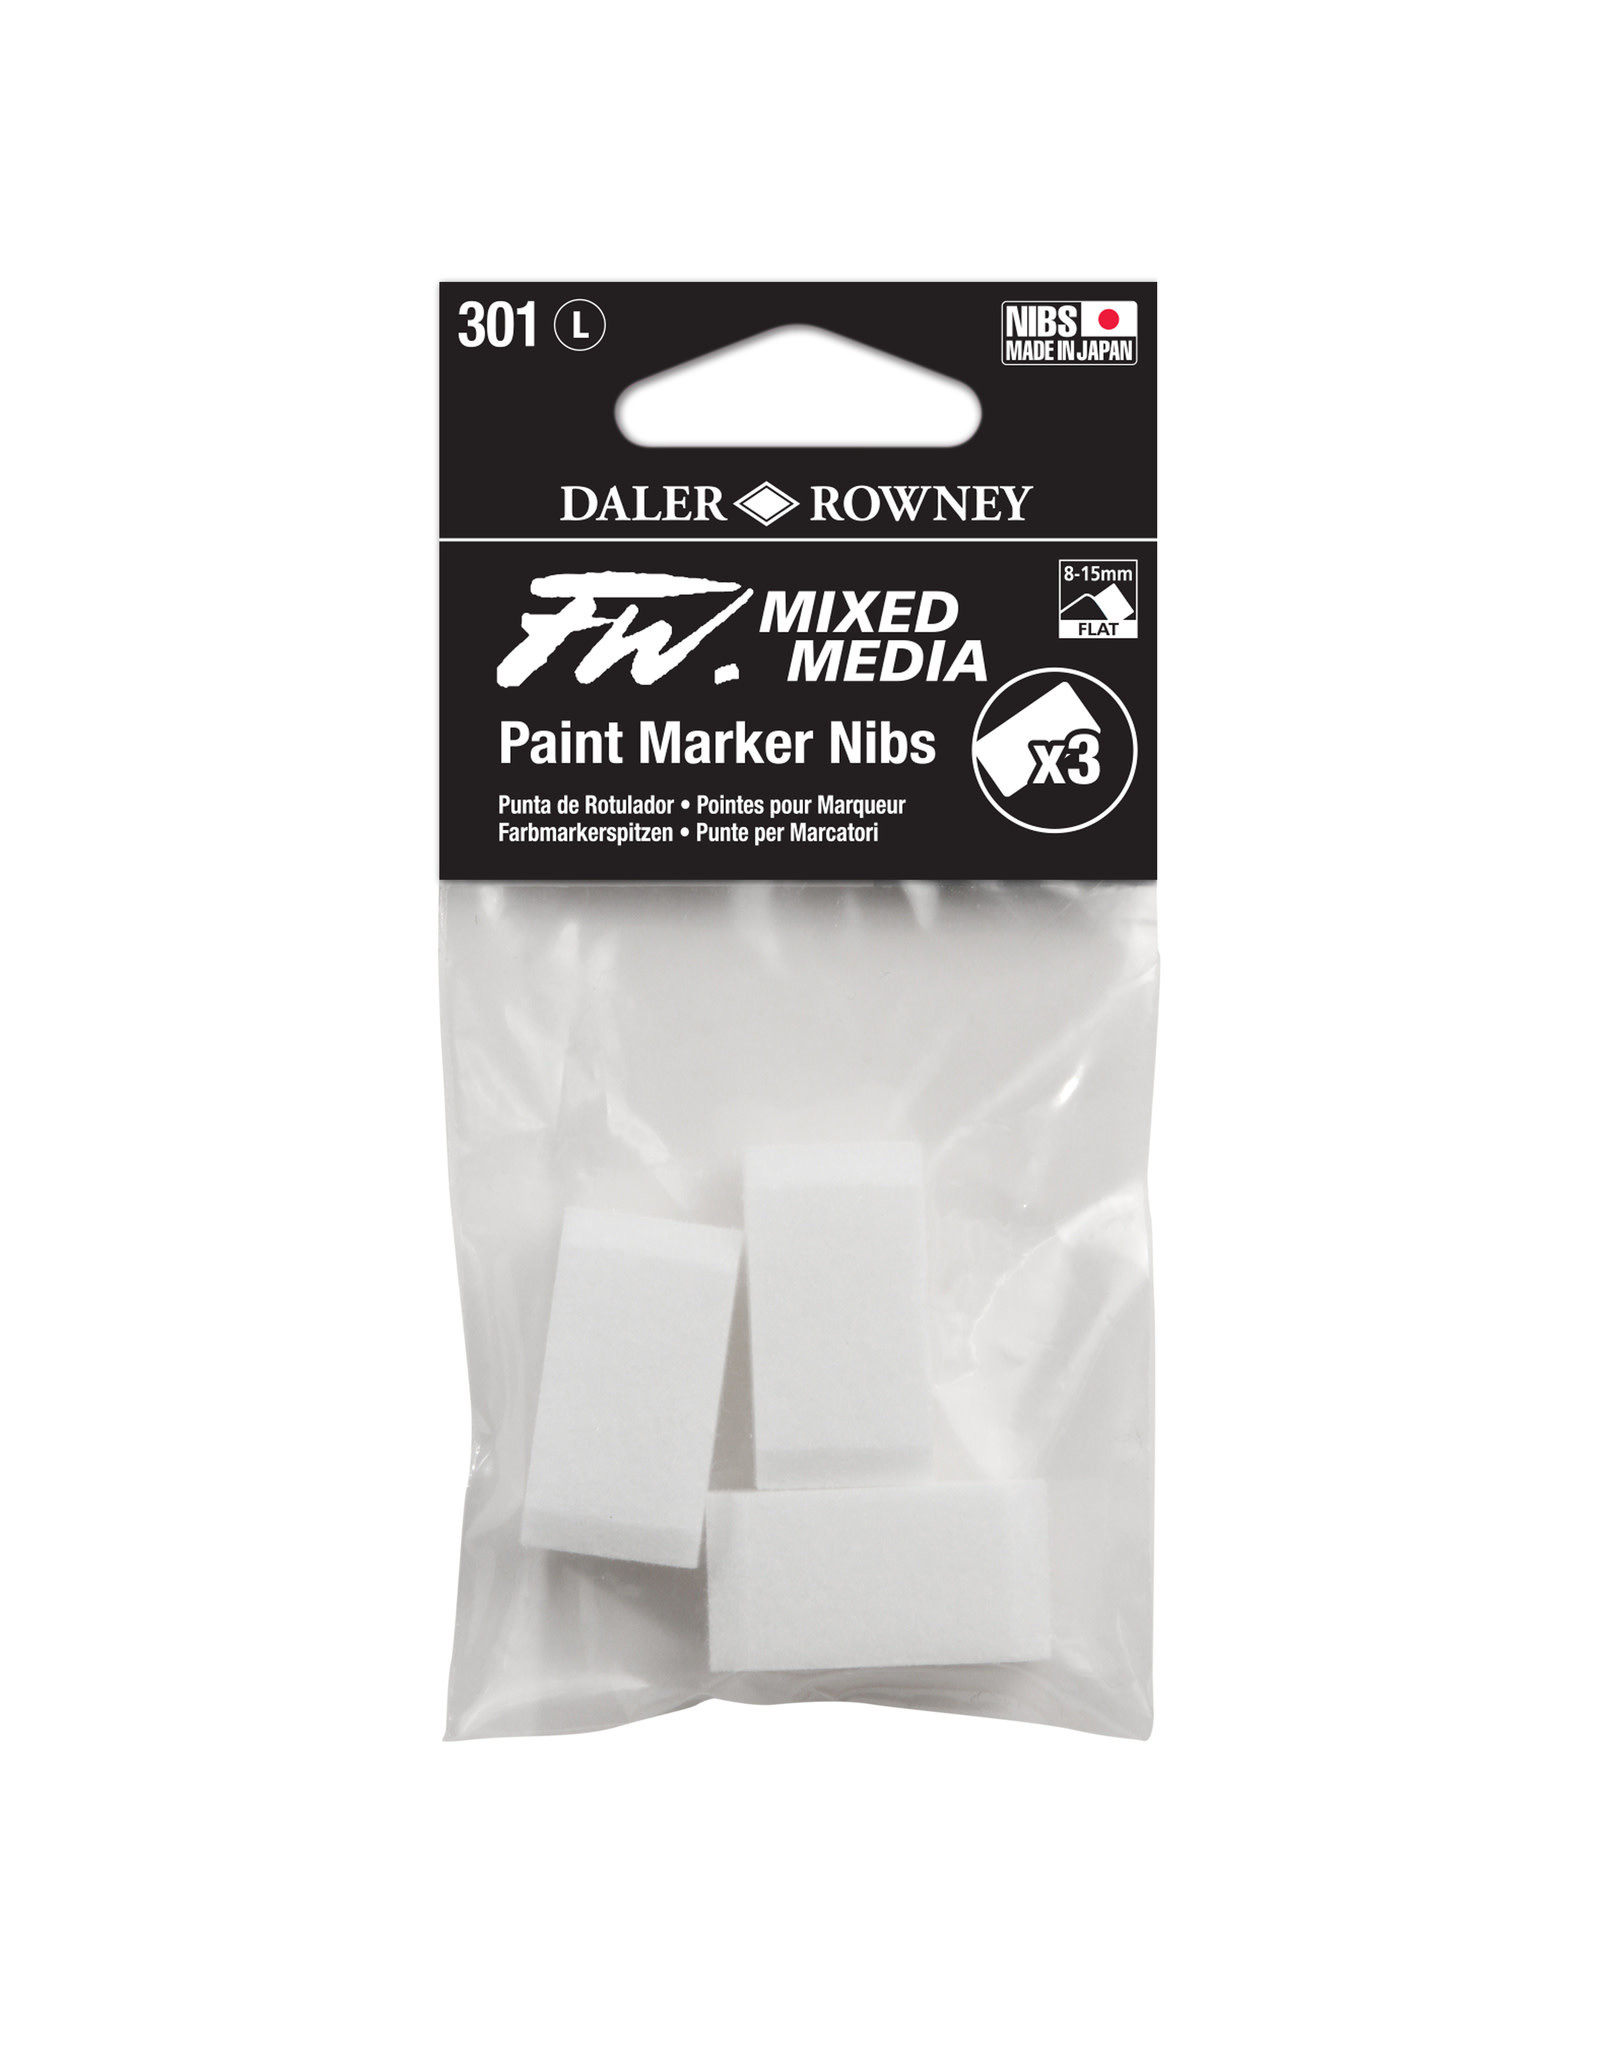 Daler-Rowney Daler-Rowney FW Paint Marker Nib Set of 3, 8-15mm, Flat